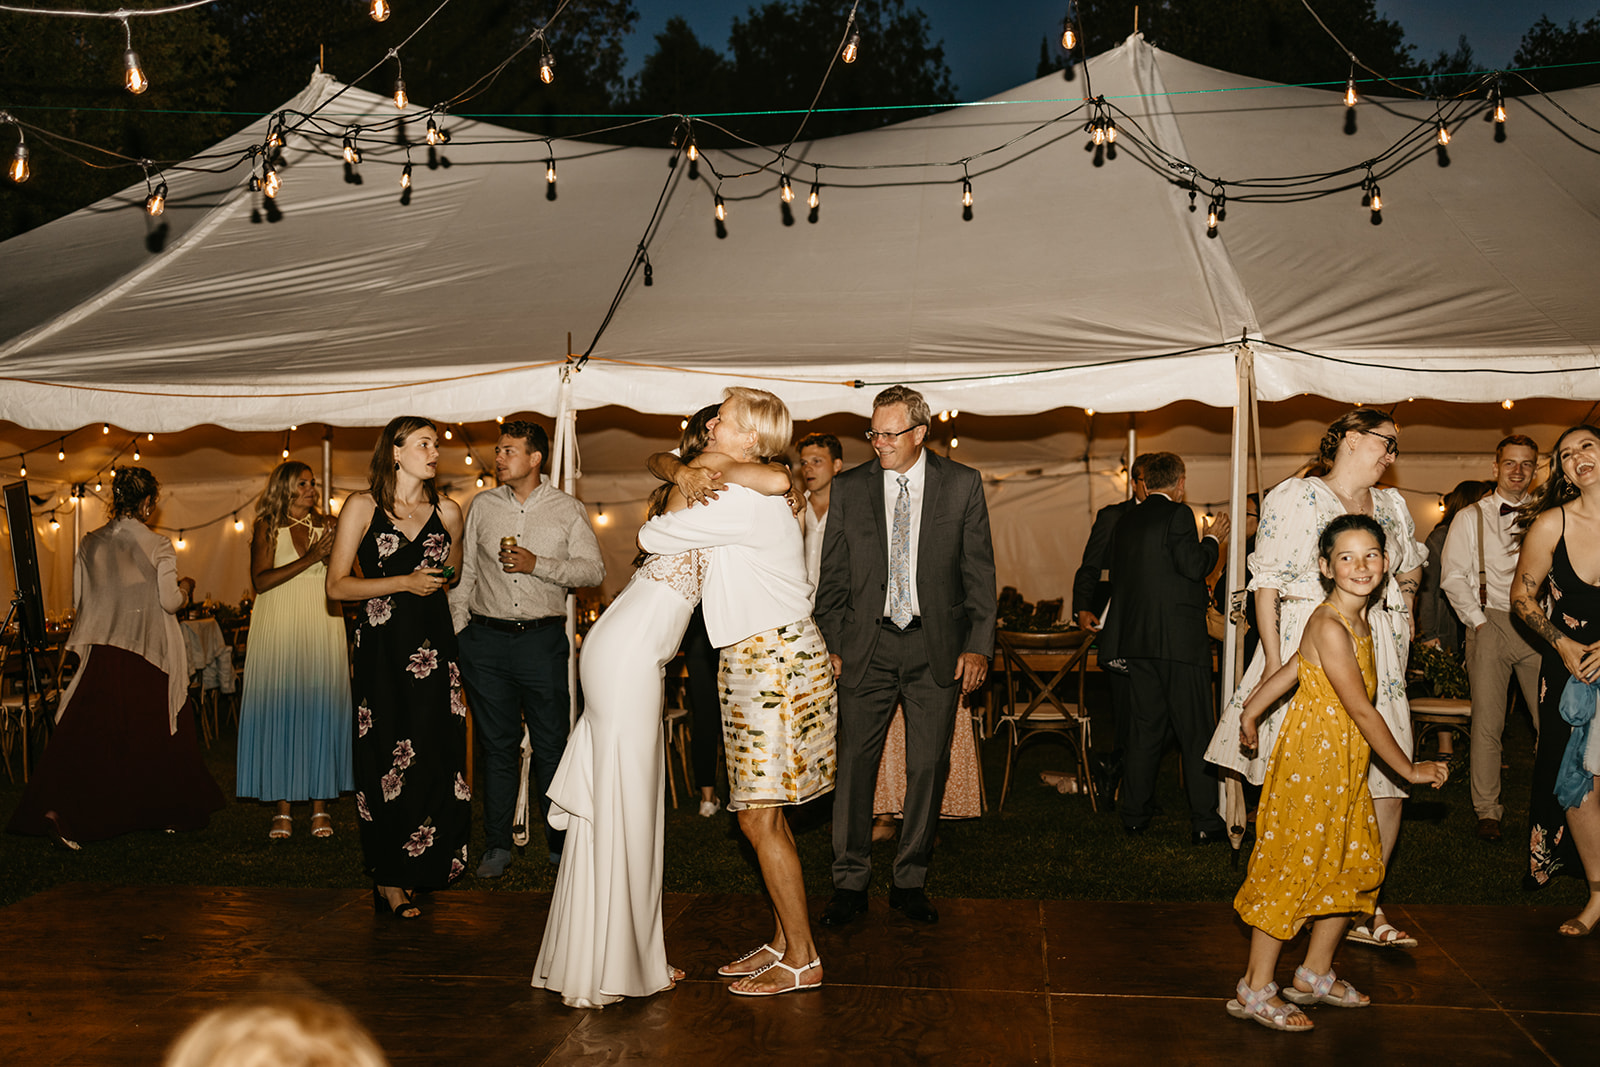 Maddie Lymburner and Chris Hartwig dancing at their wedding reception